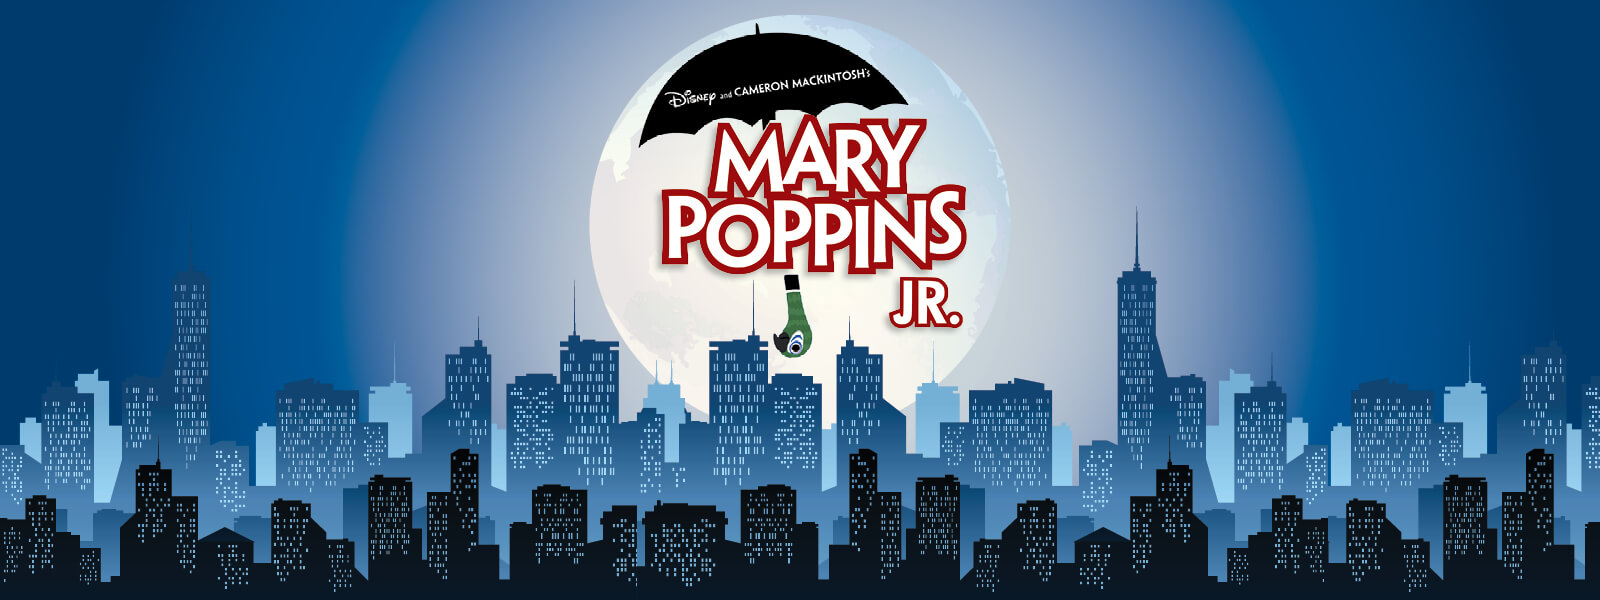 Mary Poppins Jr. Casting News